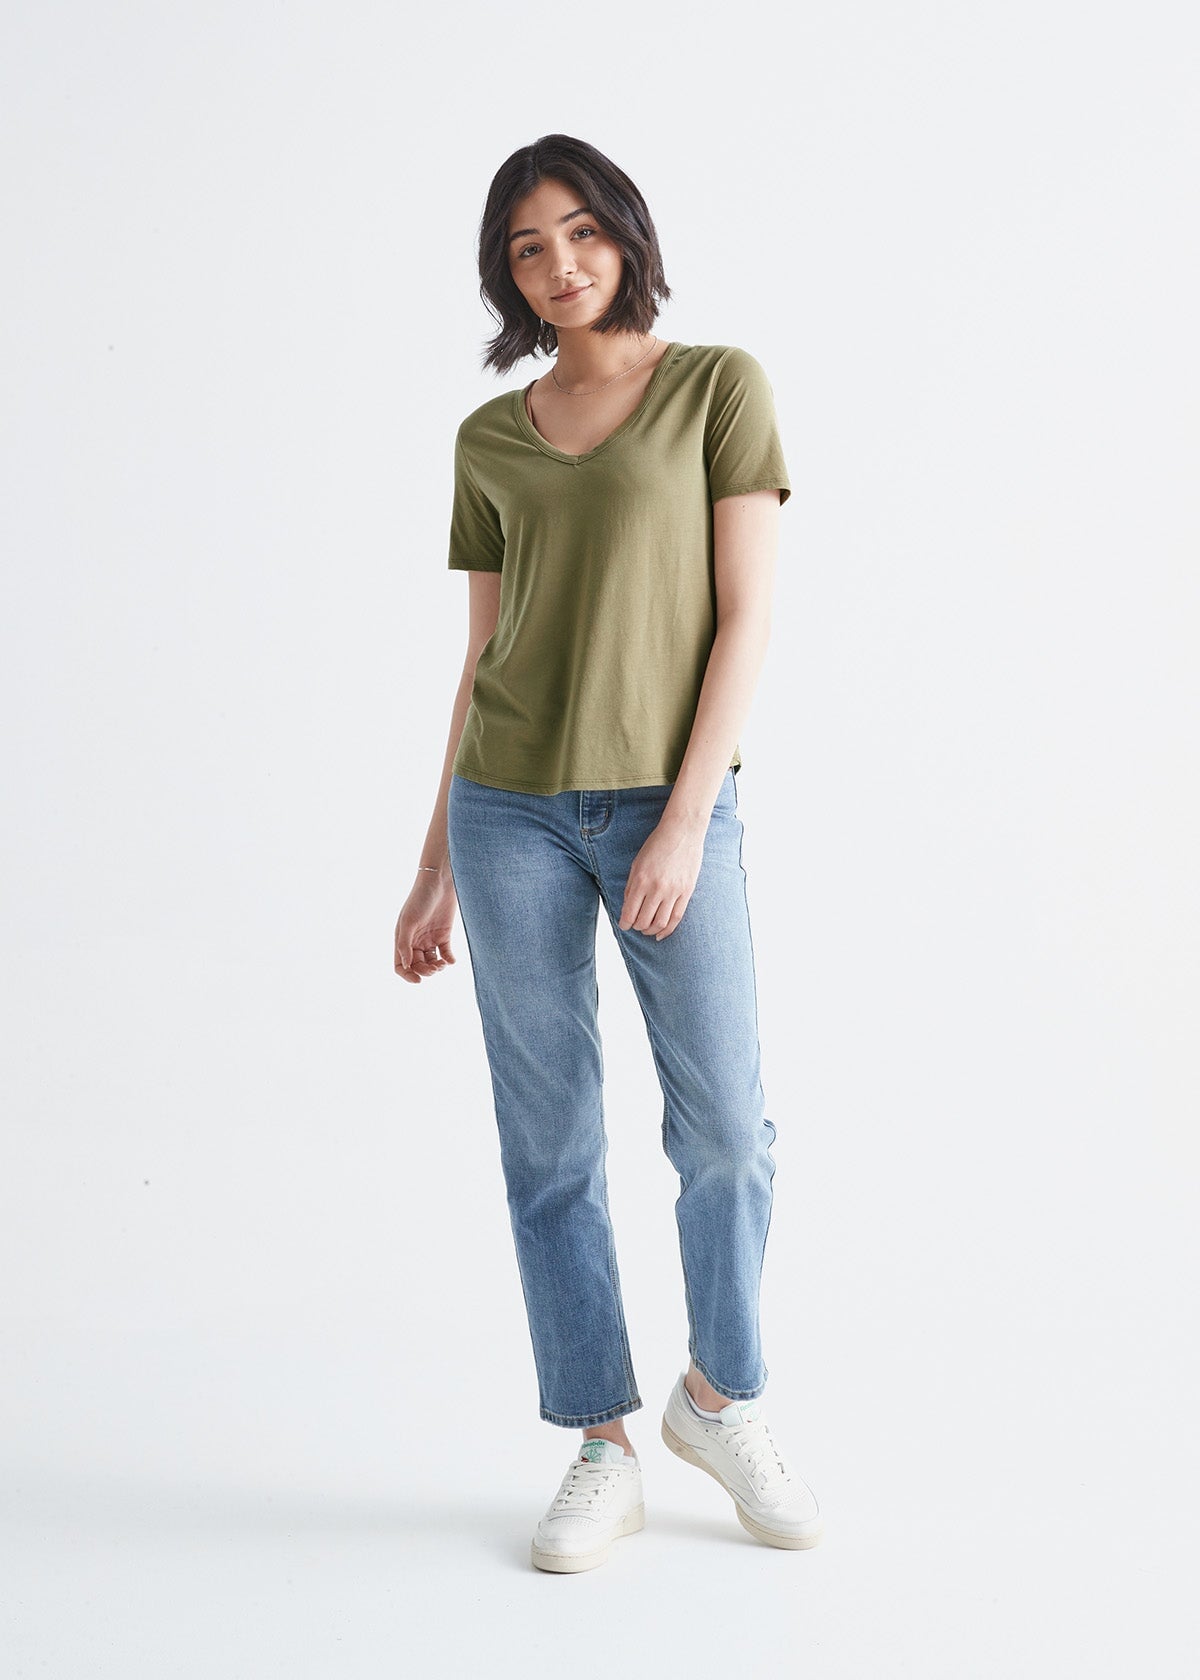 Women's Fashion Design Soft and Comfortable V-Shape Collar T-Shirt